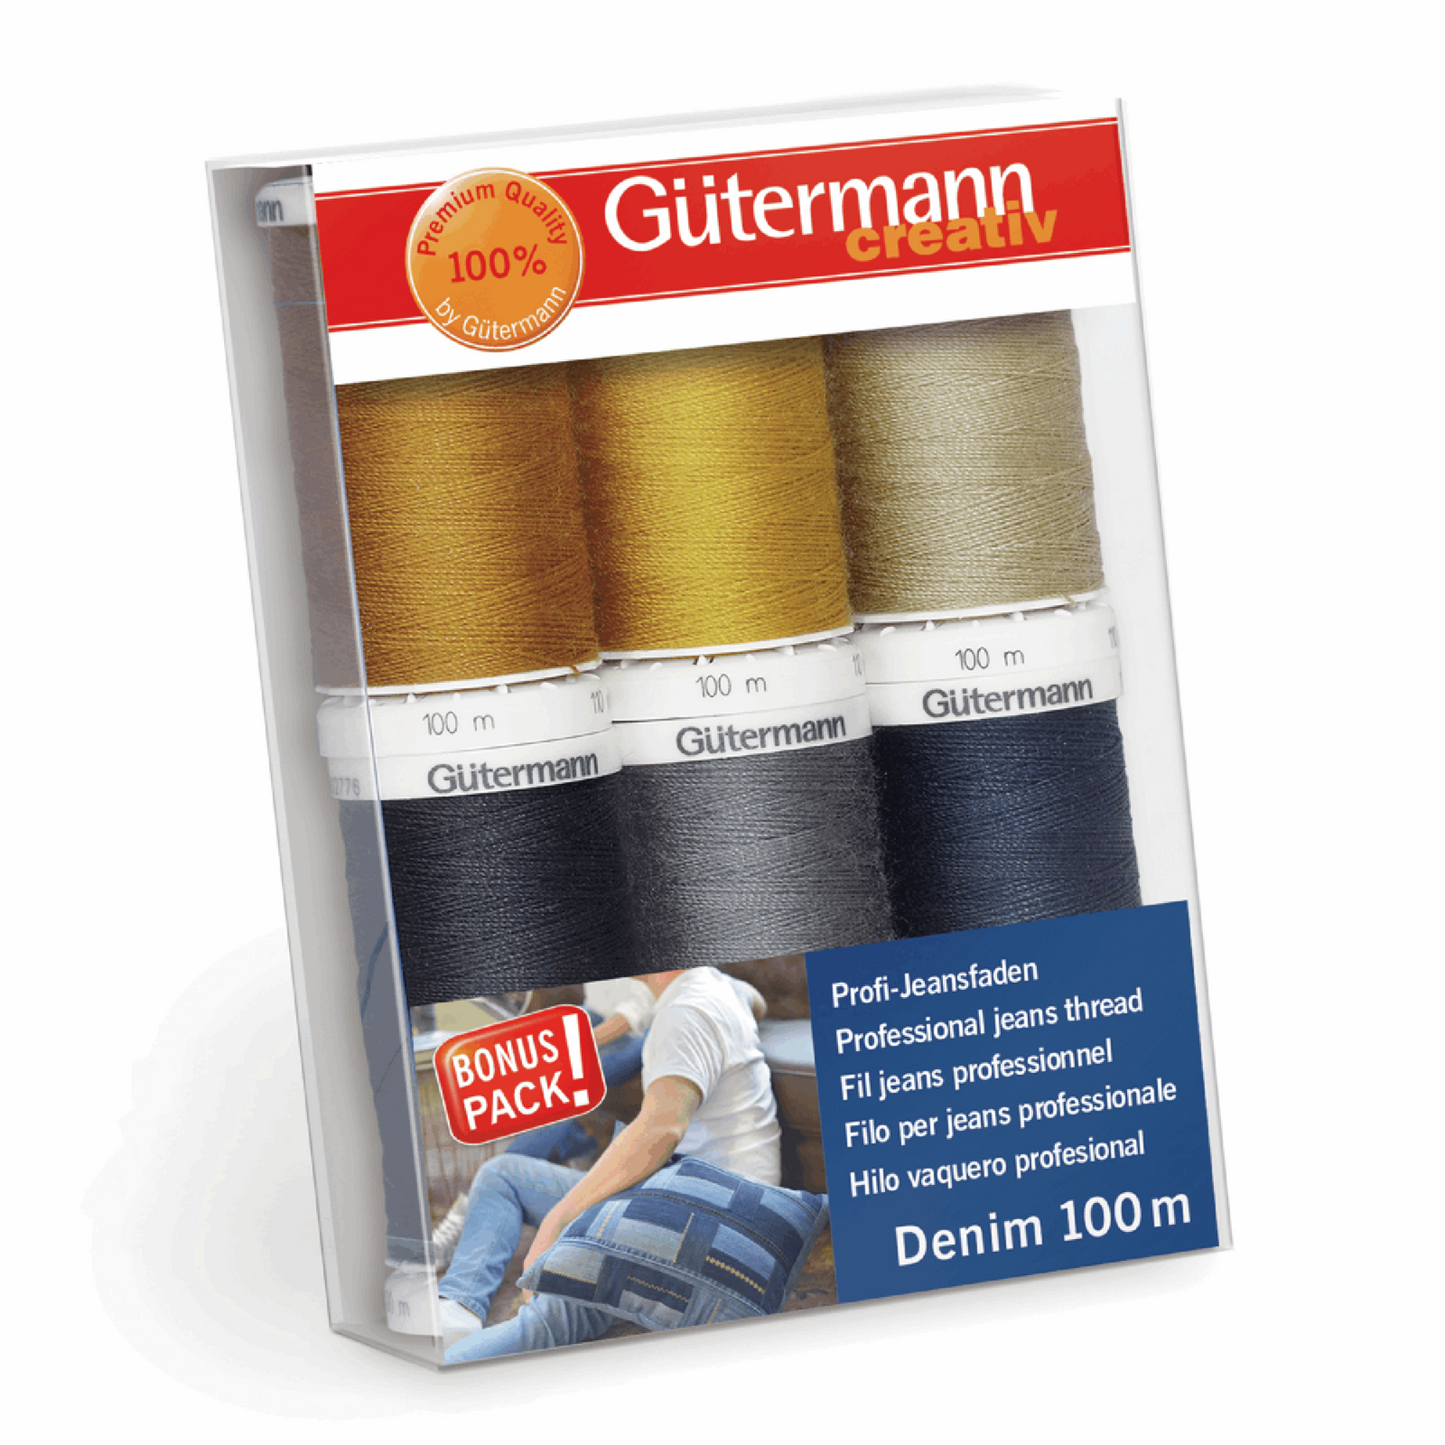 Gutermann Denim Thread Set 100m x 6 reels, Multicoloured 731144-1